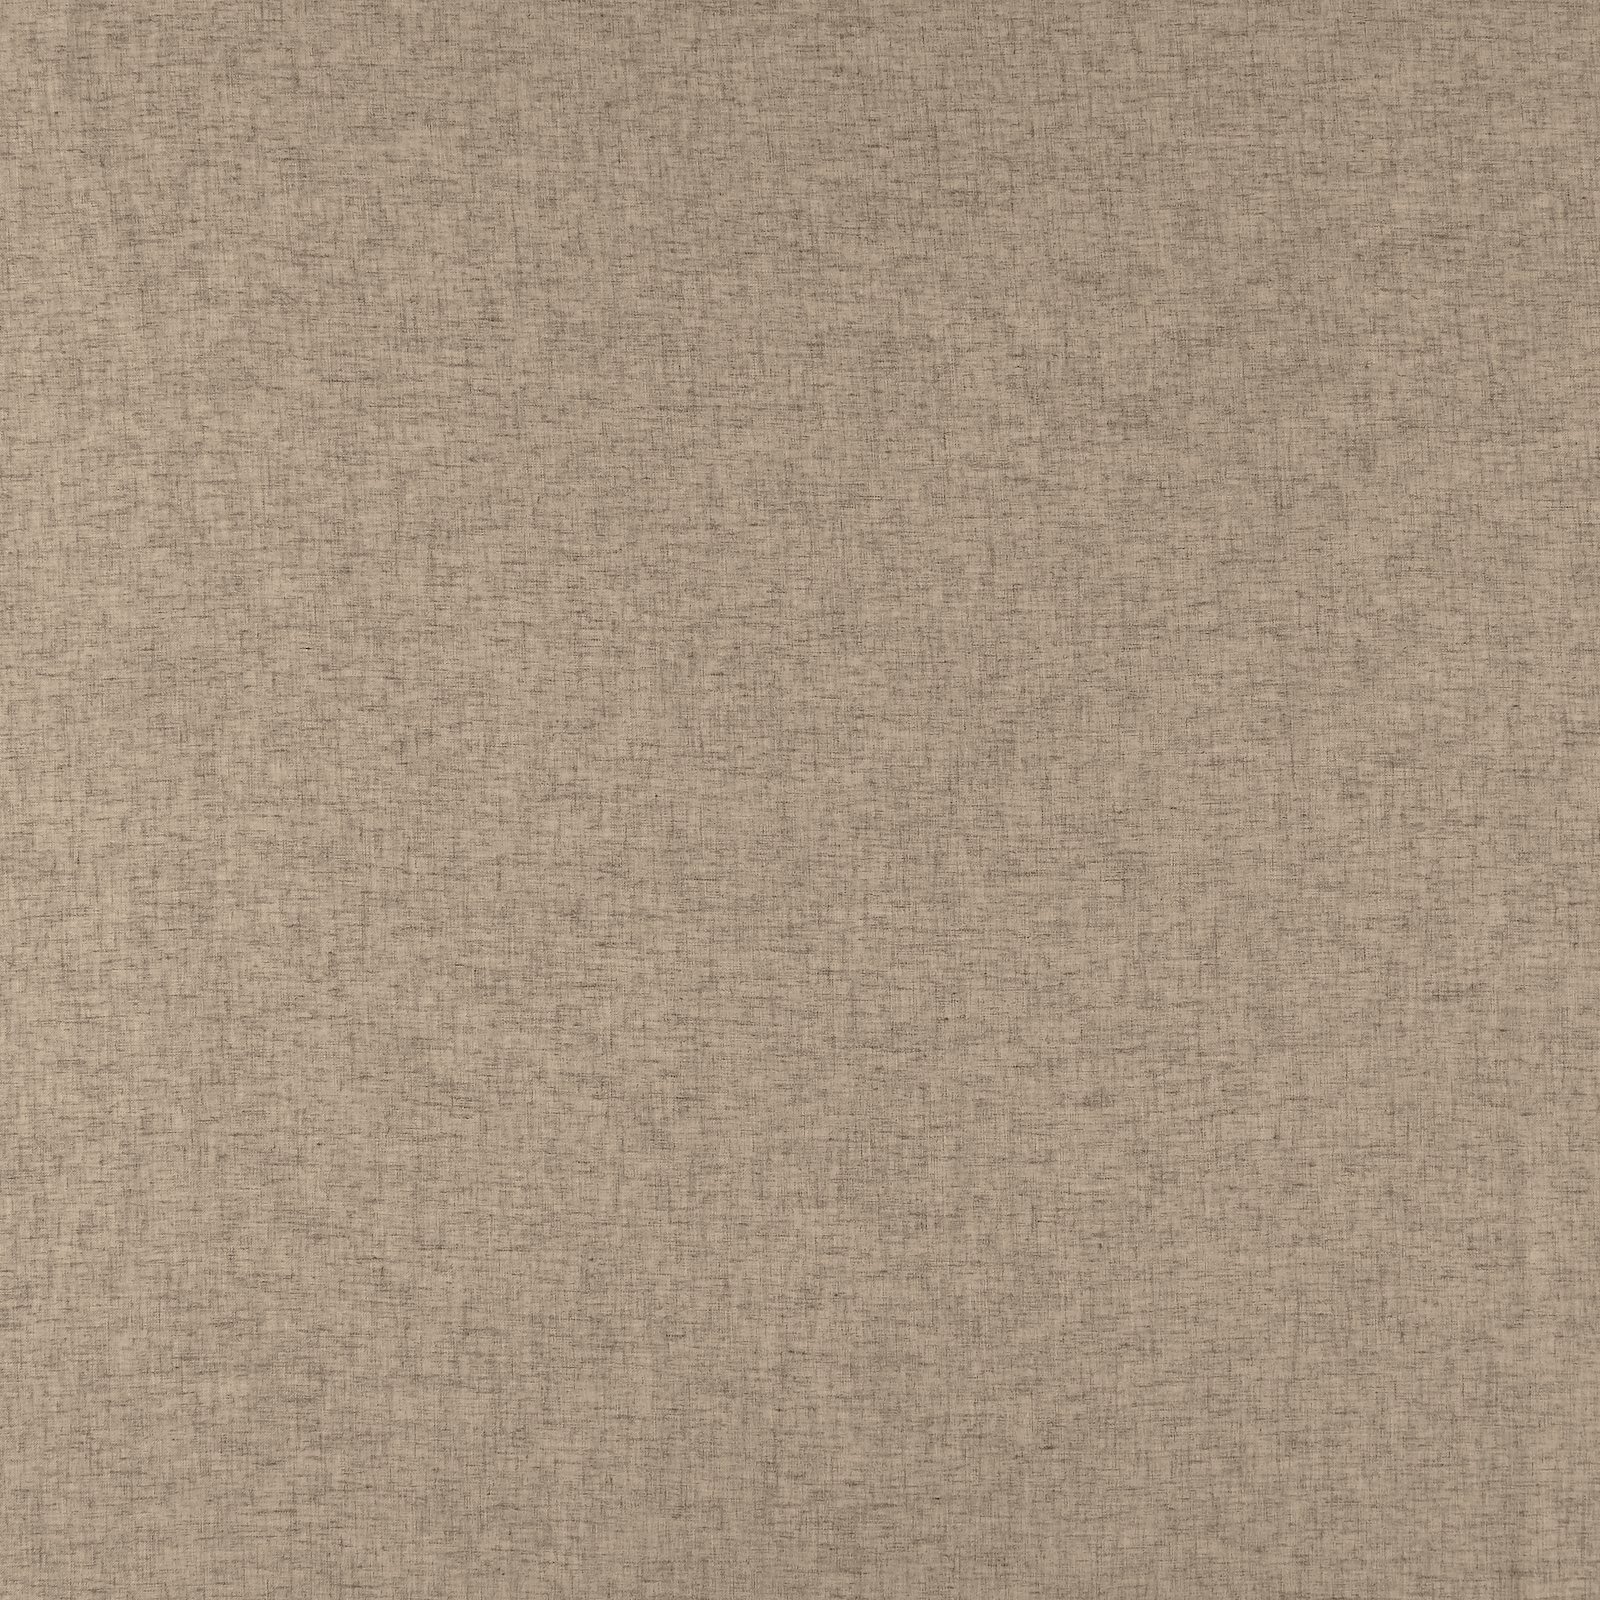 Voile light dusty terracotta polyester/linen blend 835176_pack_solid